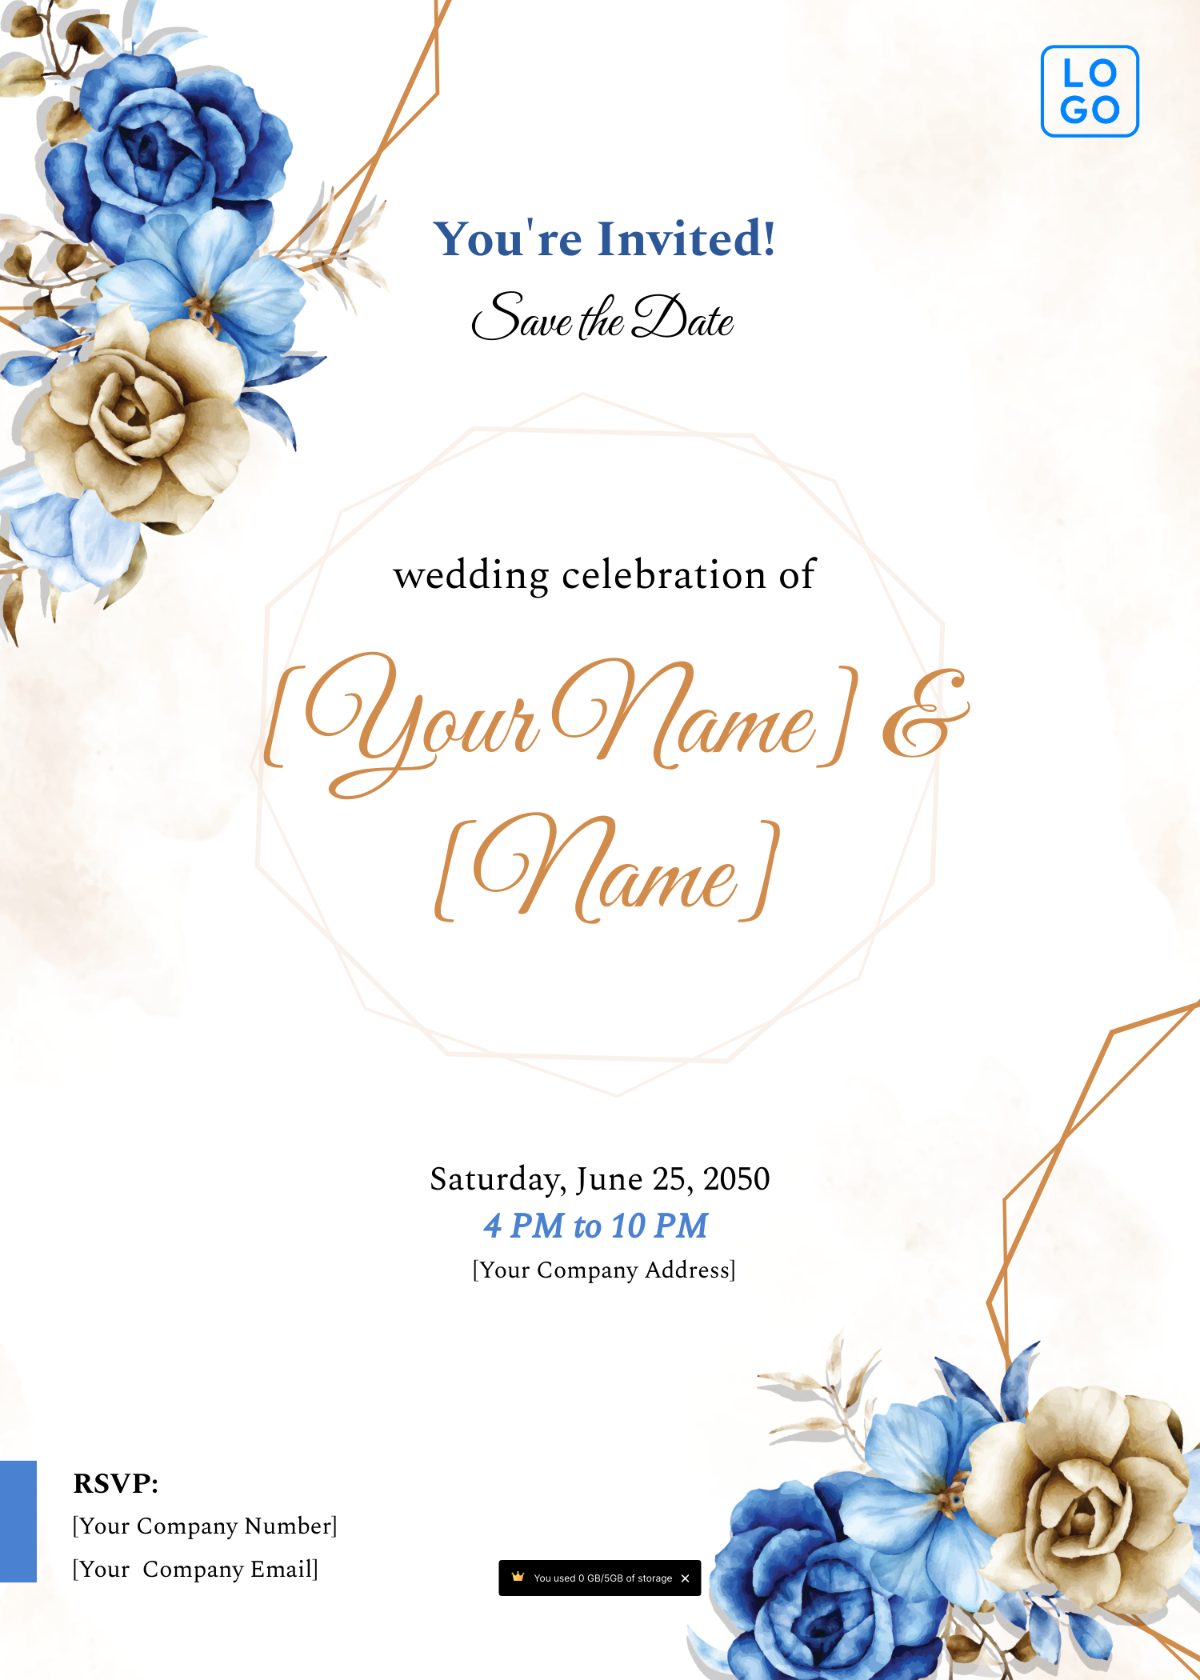 Save the Date Bridal Invitation